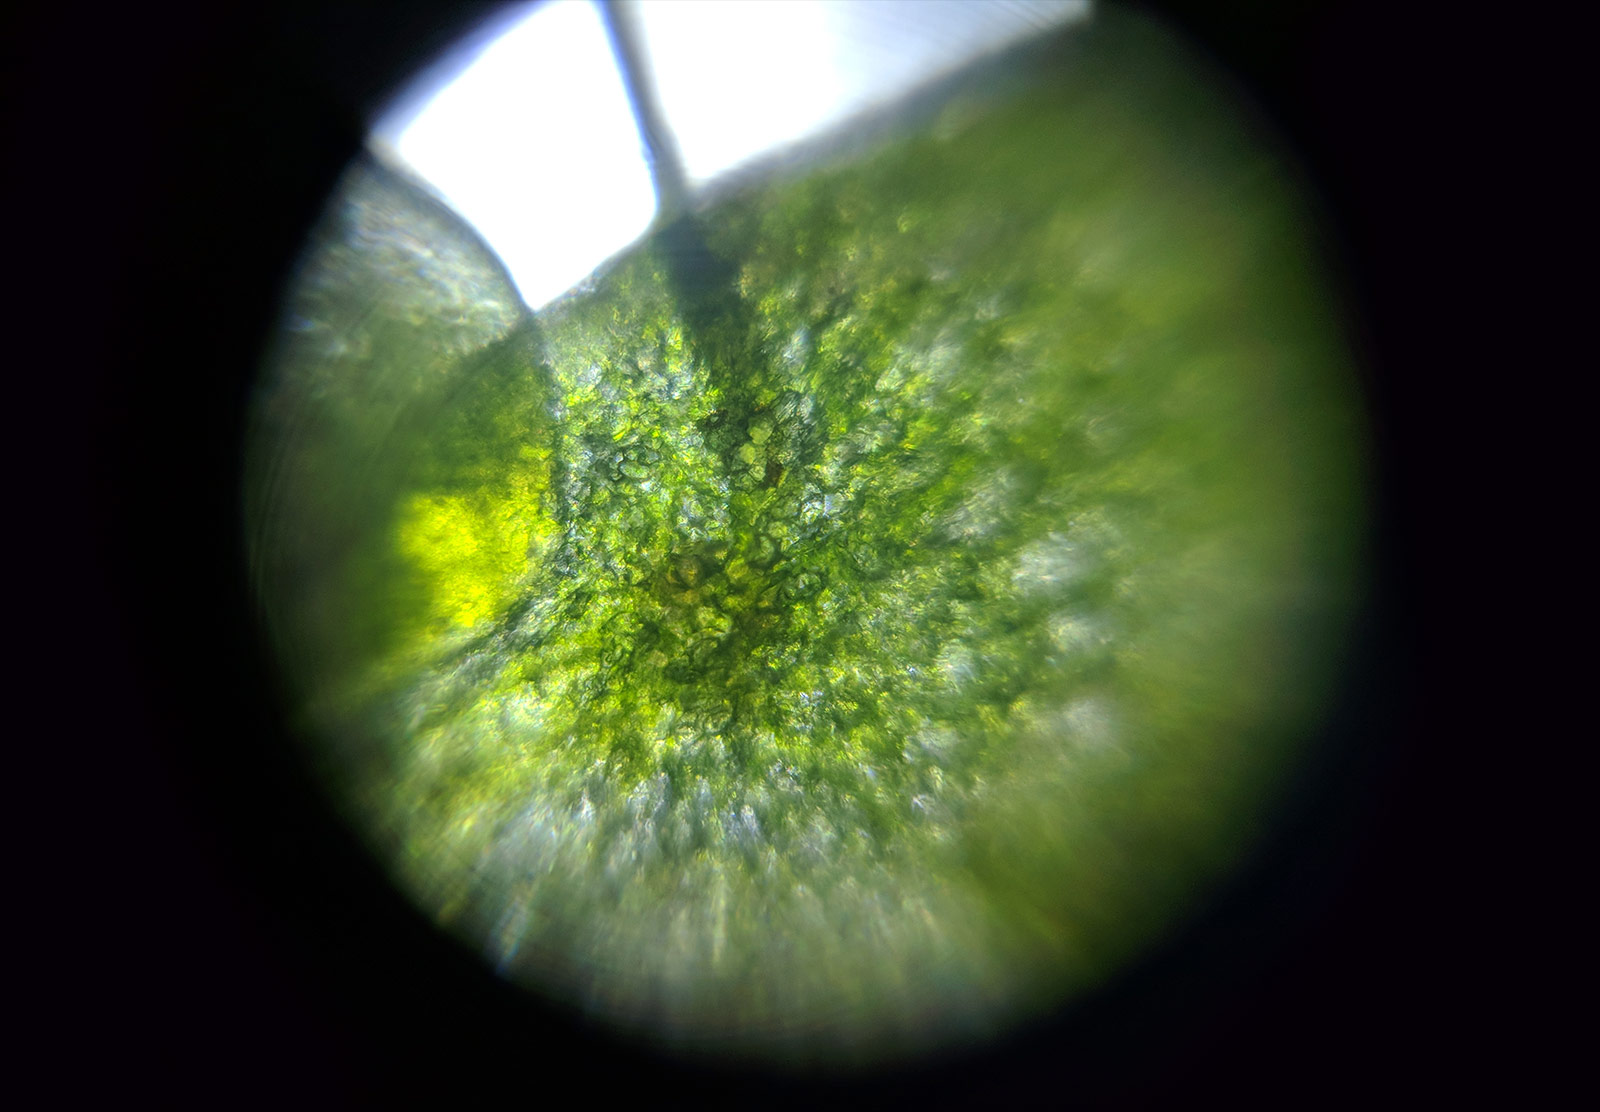 Green pond algae under microscope